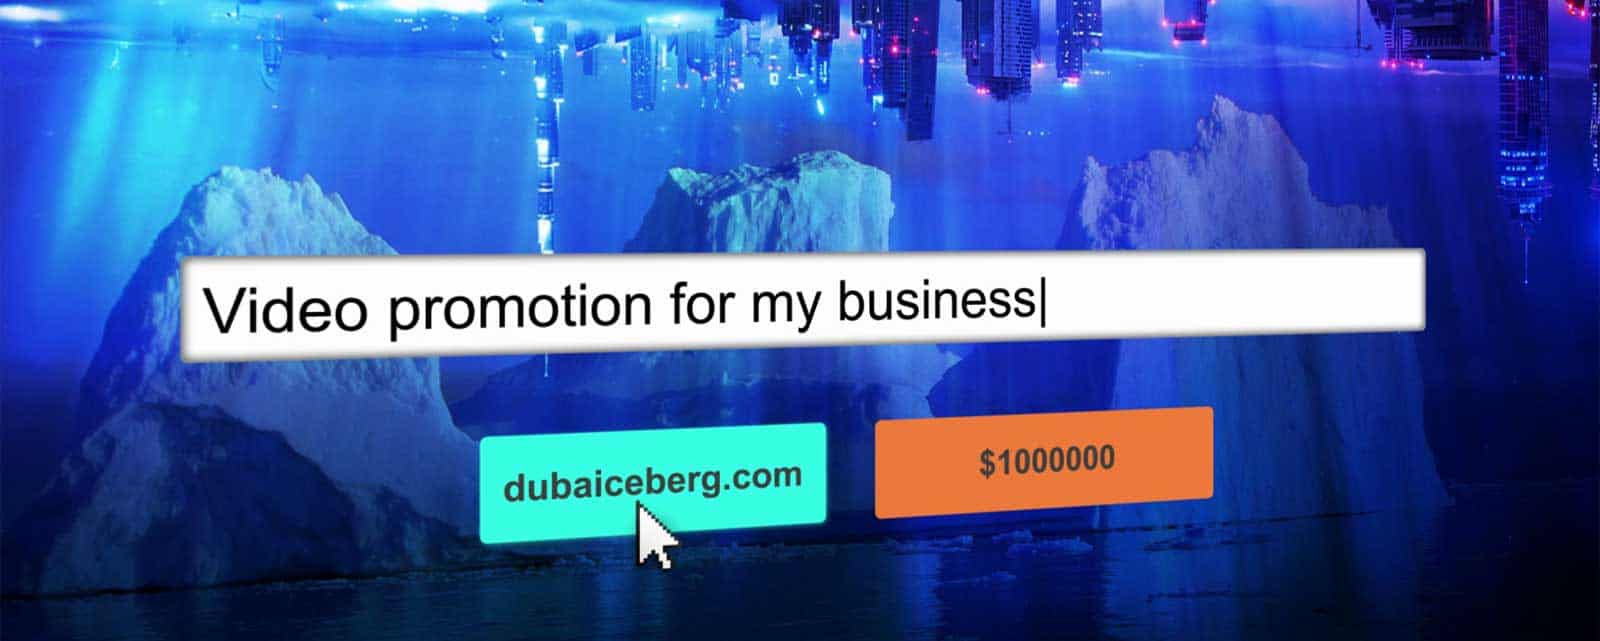 (c) Dubaiceberg.com